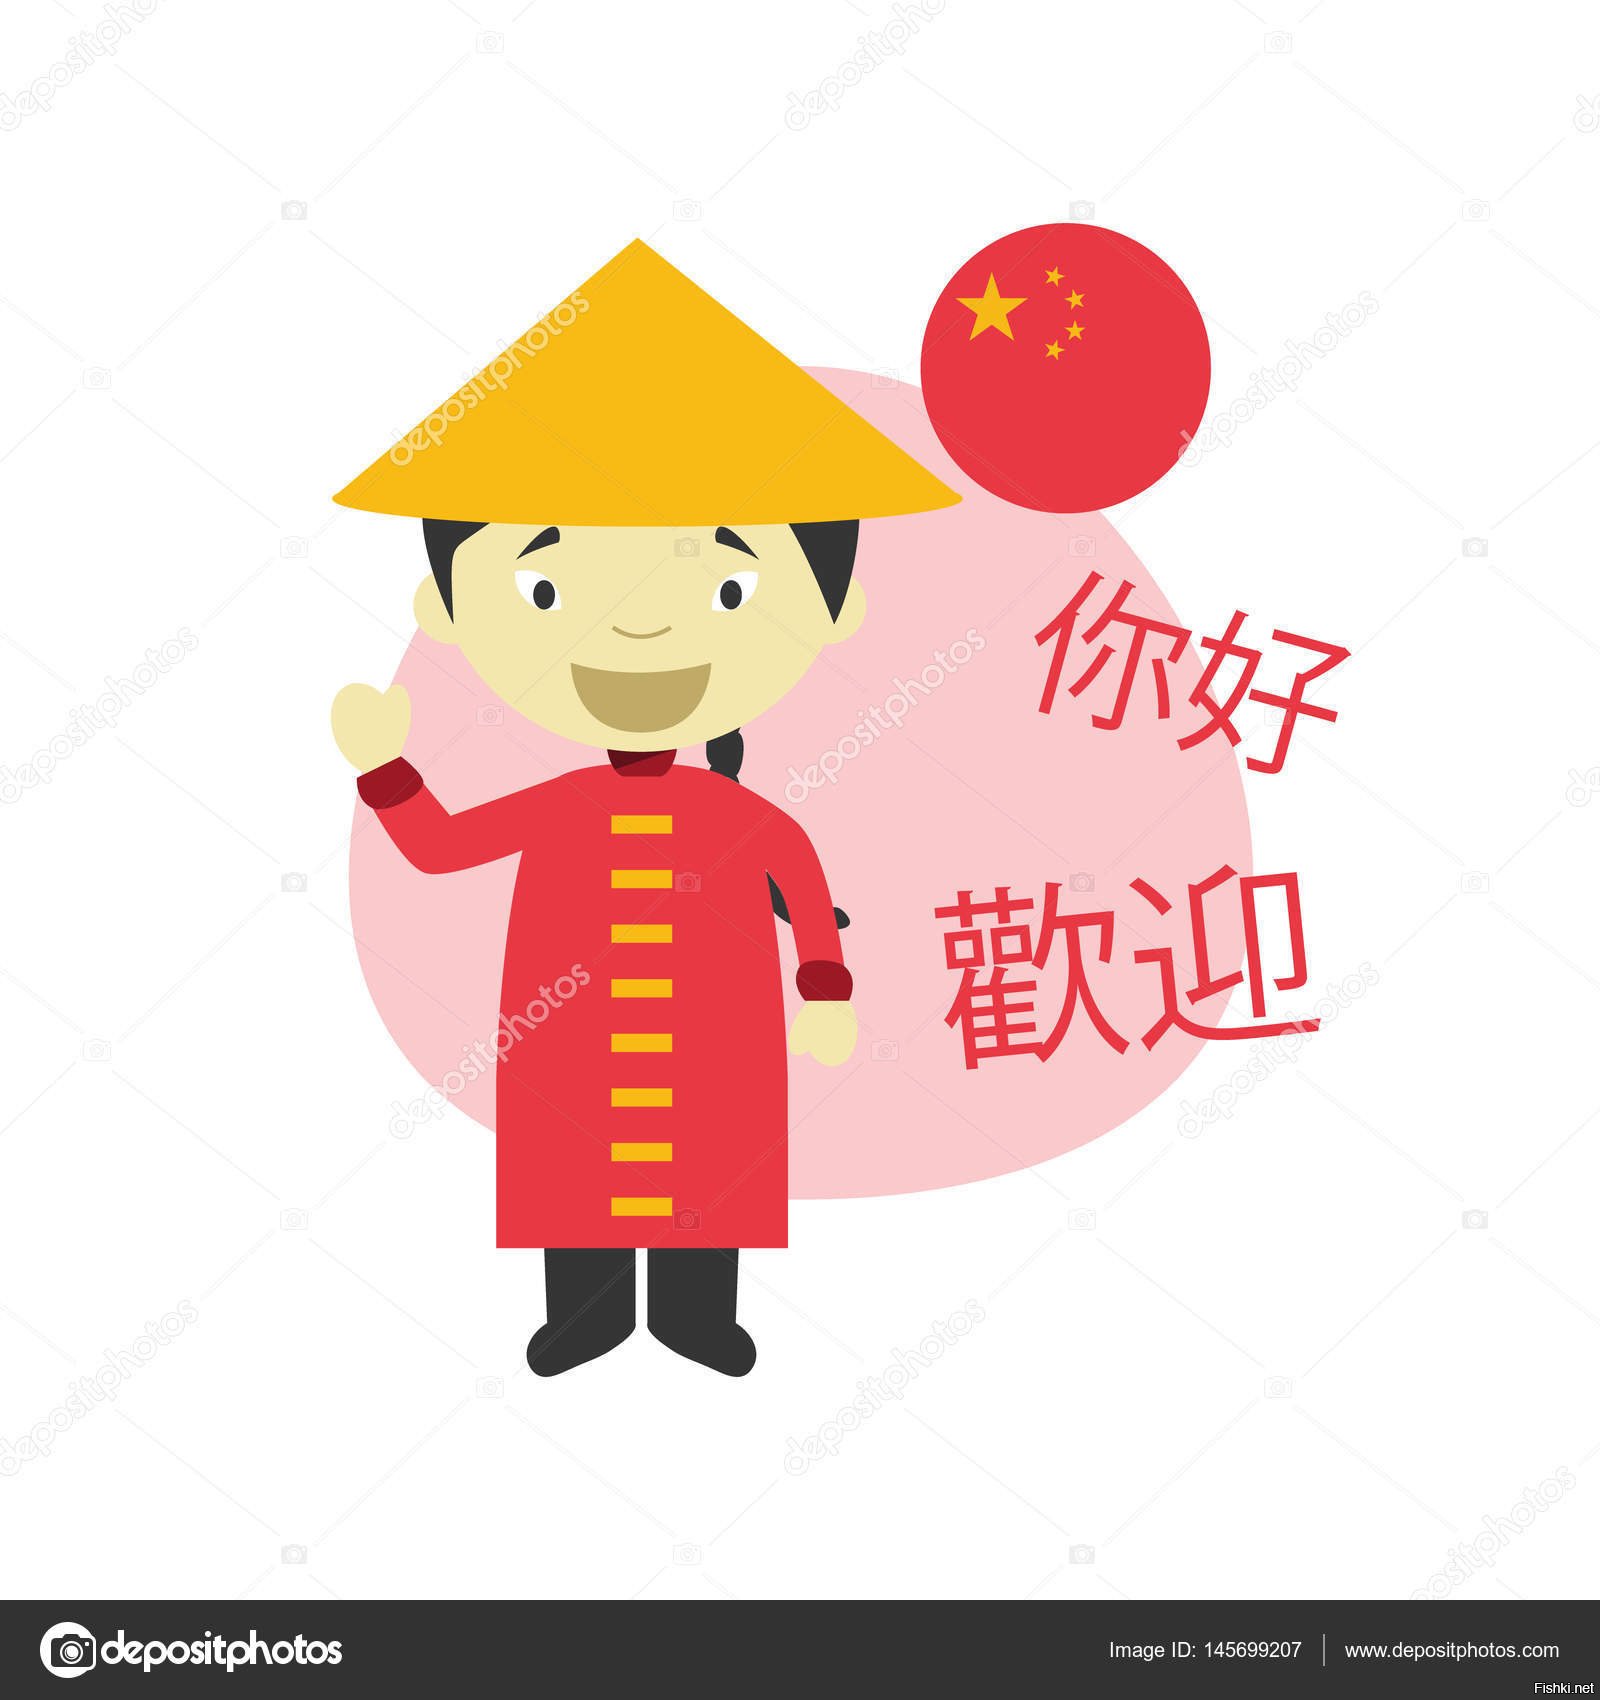 Переведи на китайский hello. Приветствие на китайском для детей. Приветствие китайцев. Здравствуйте на китайском языке. Приветствие в Китае дети.